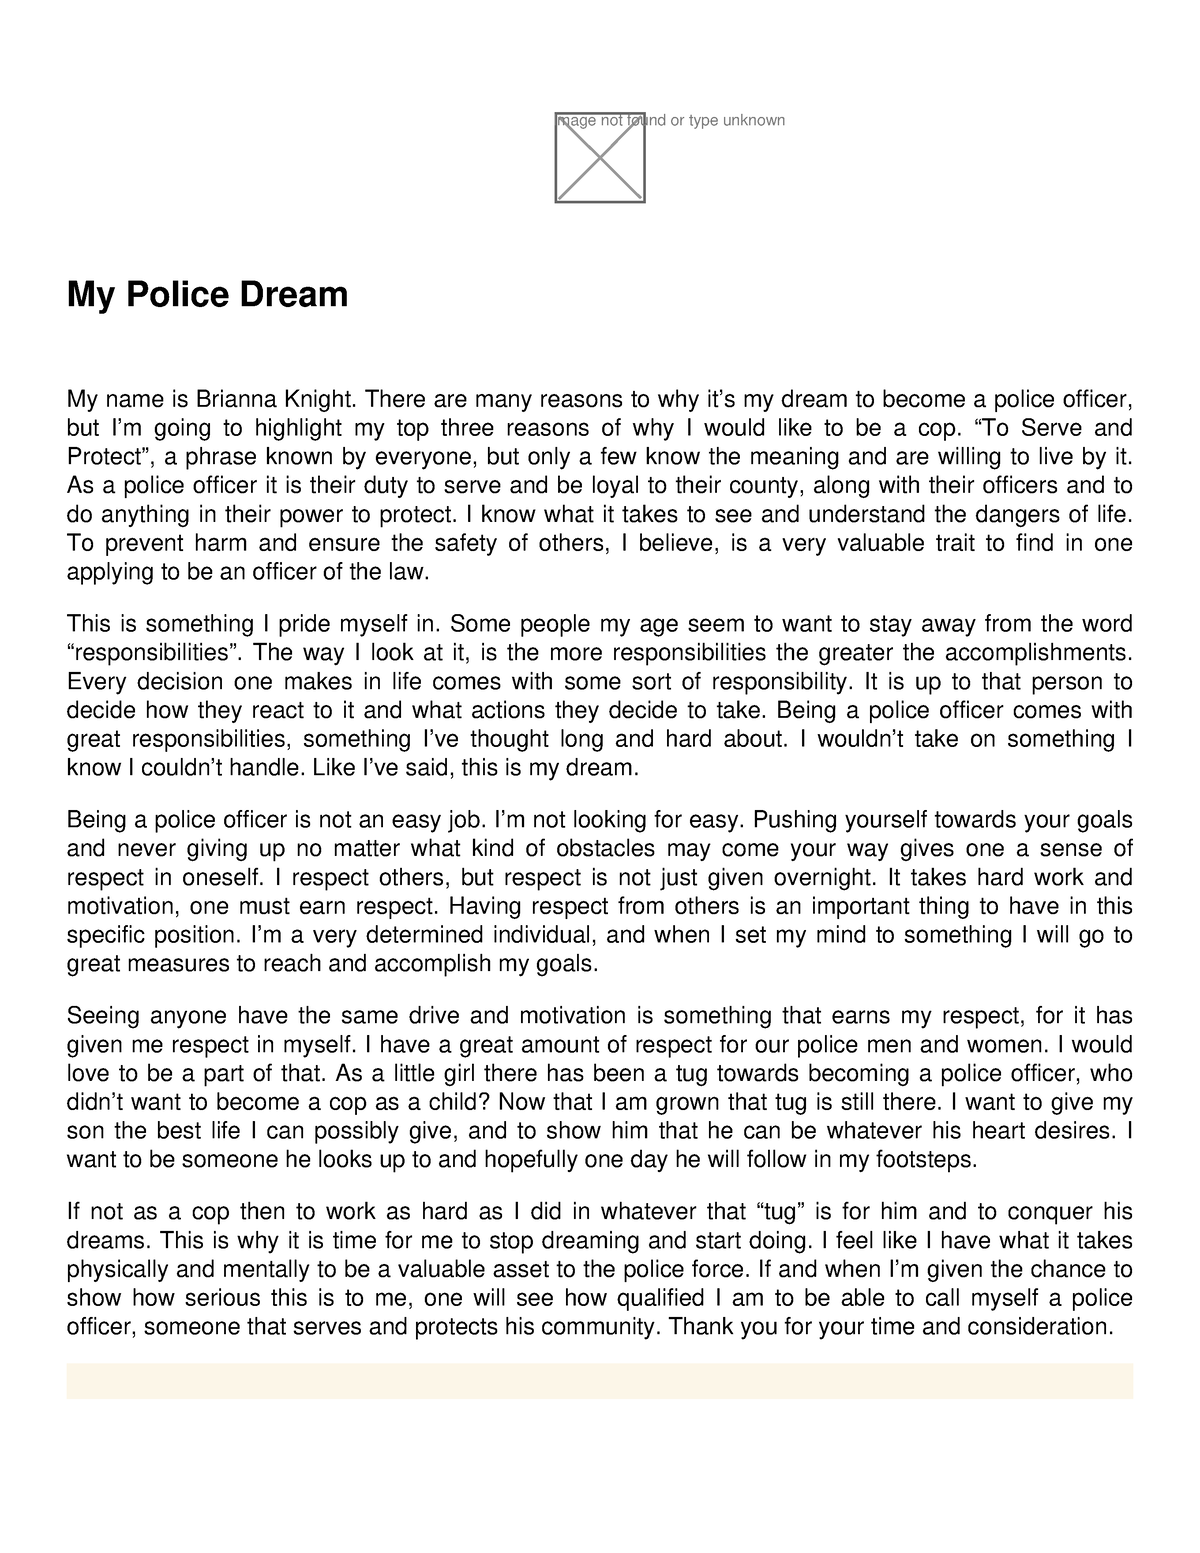 essay for dream police